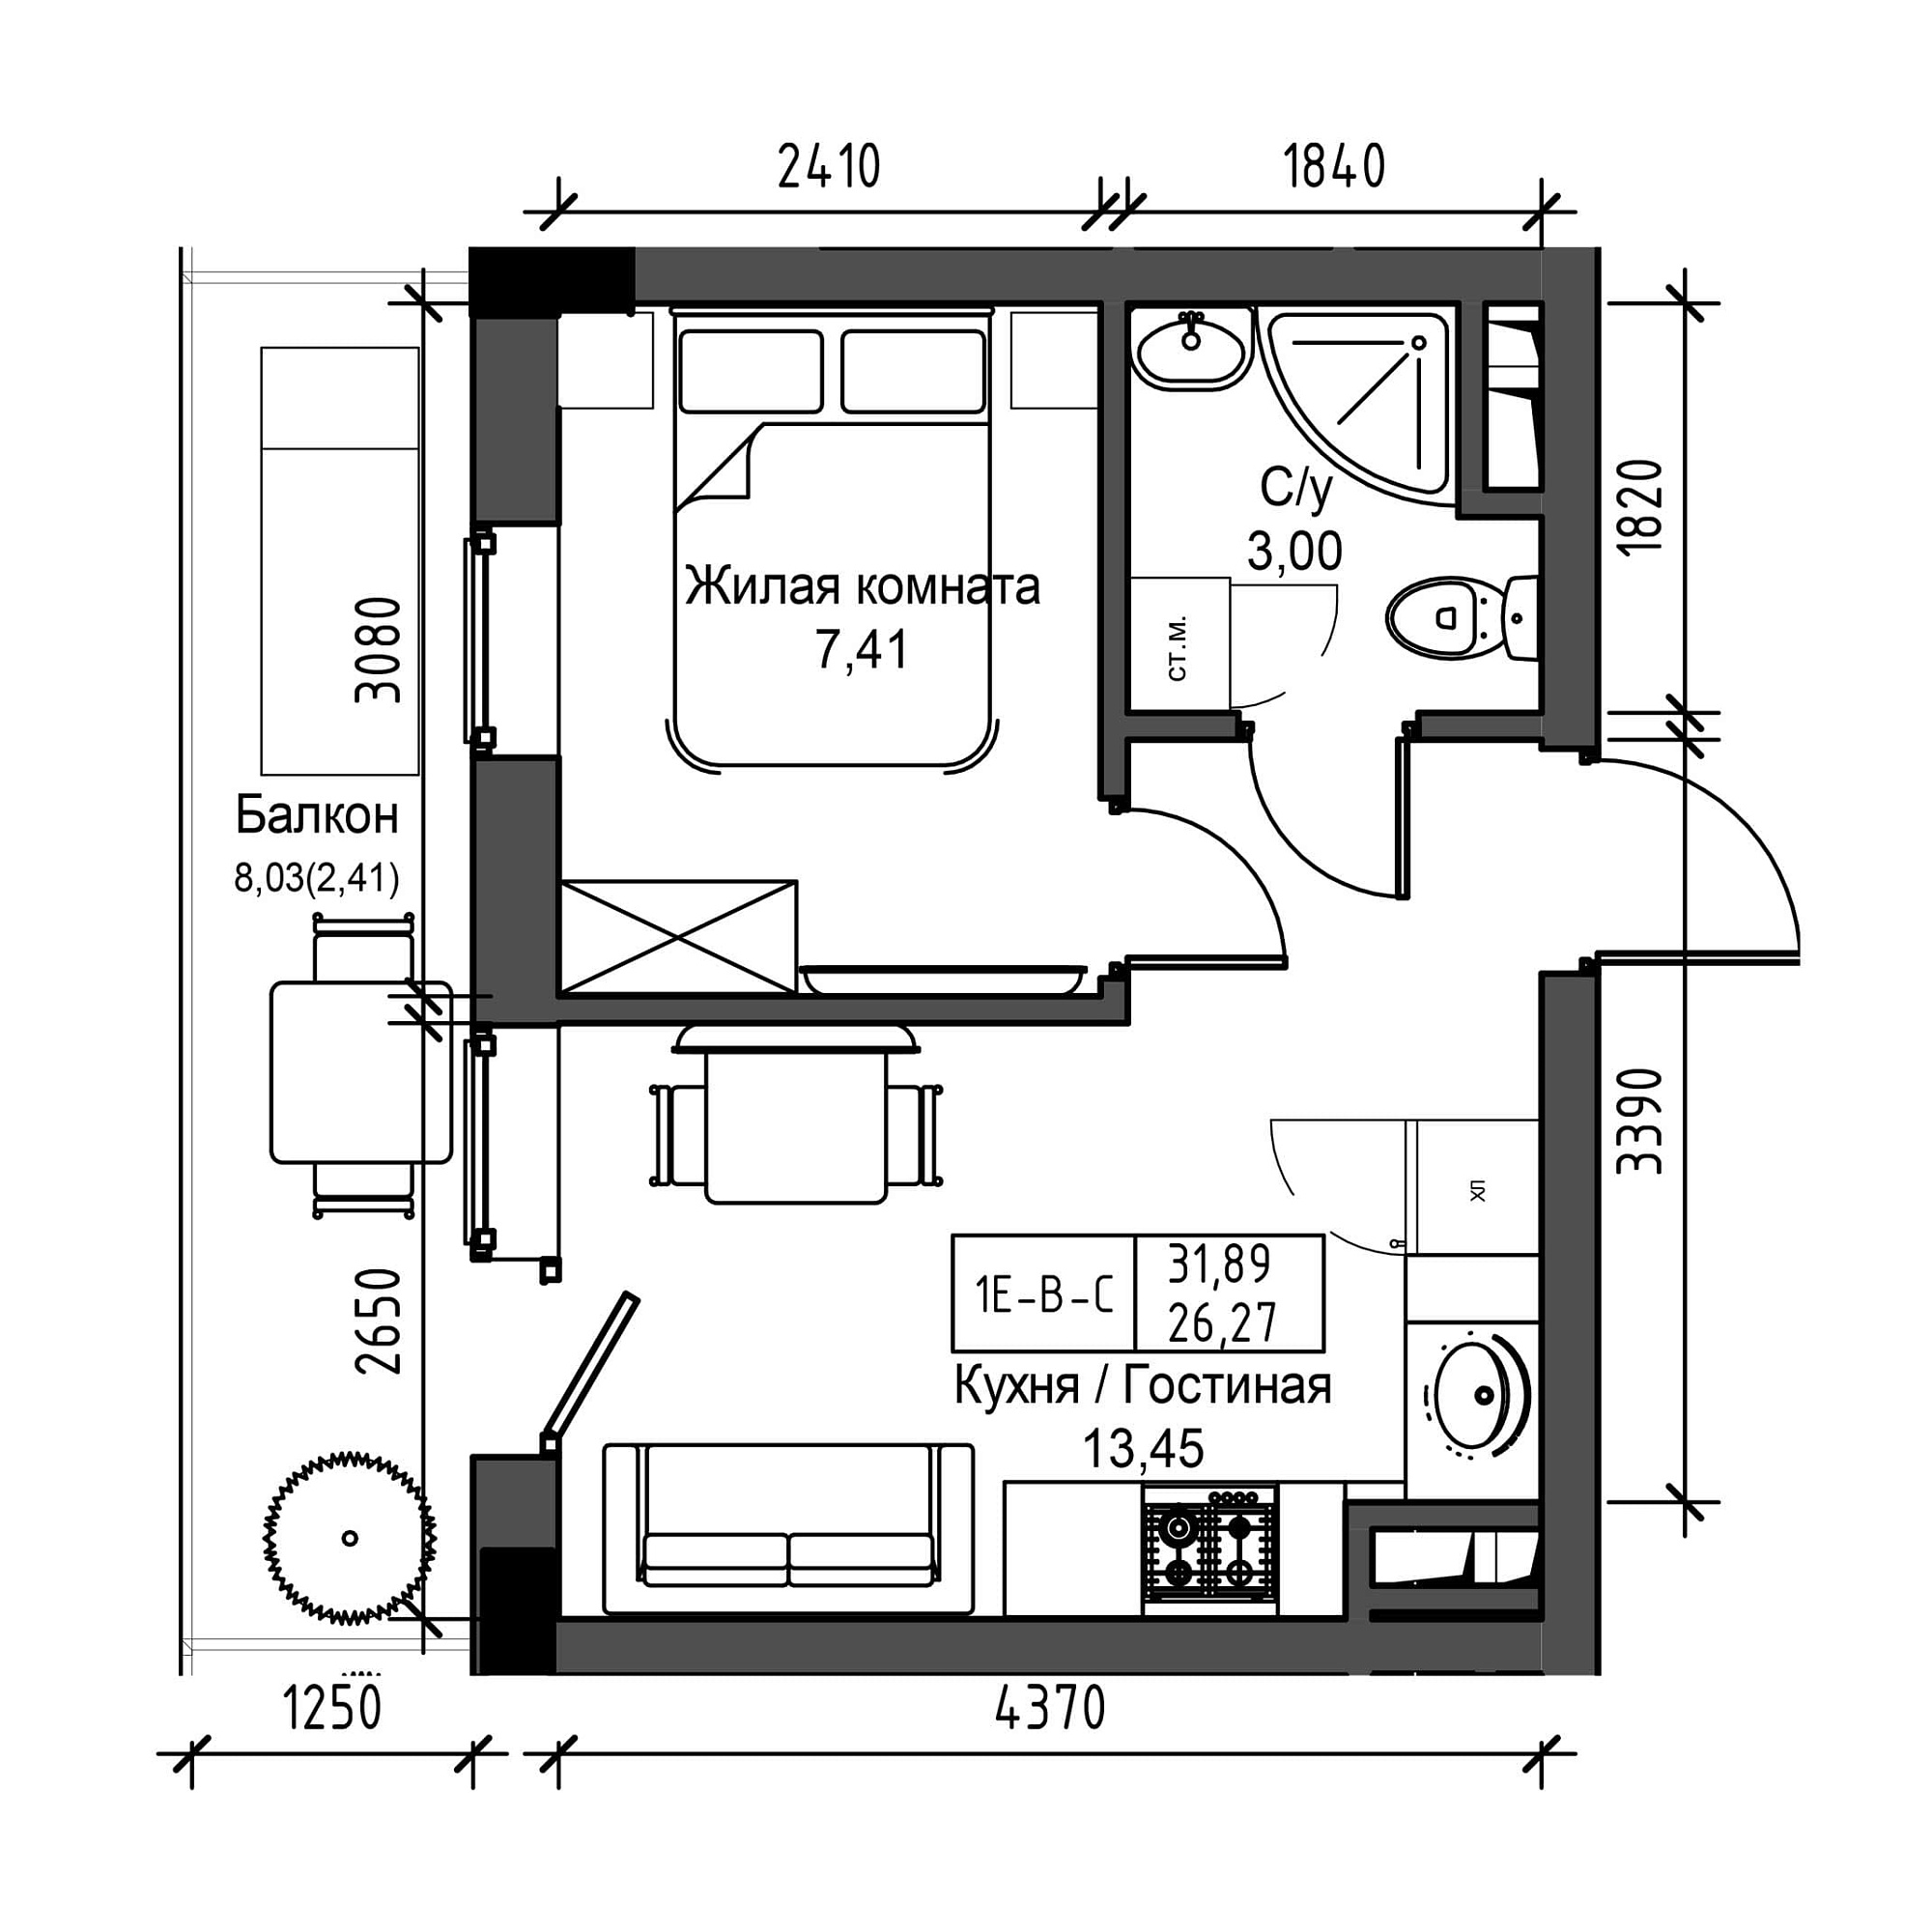 Планування 1-к квартира площею 26.27м2, UM-001-04/0015.